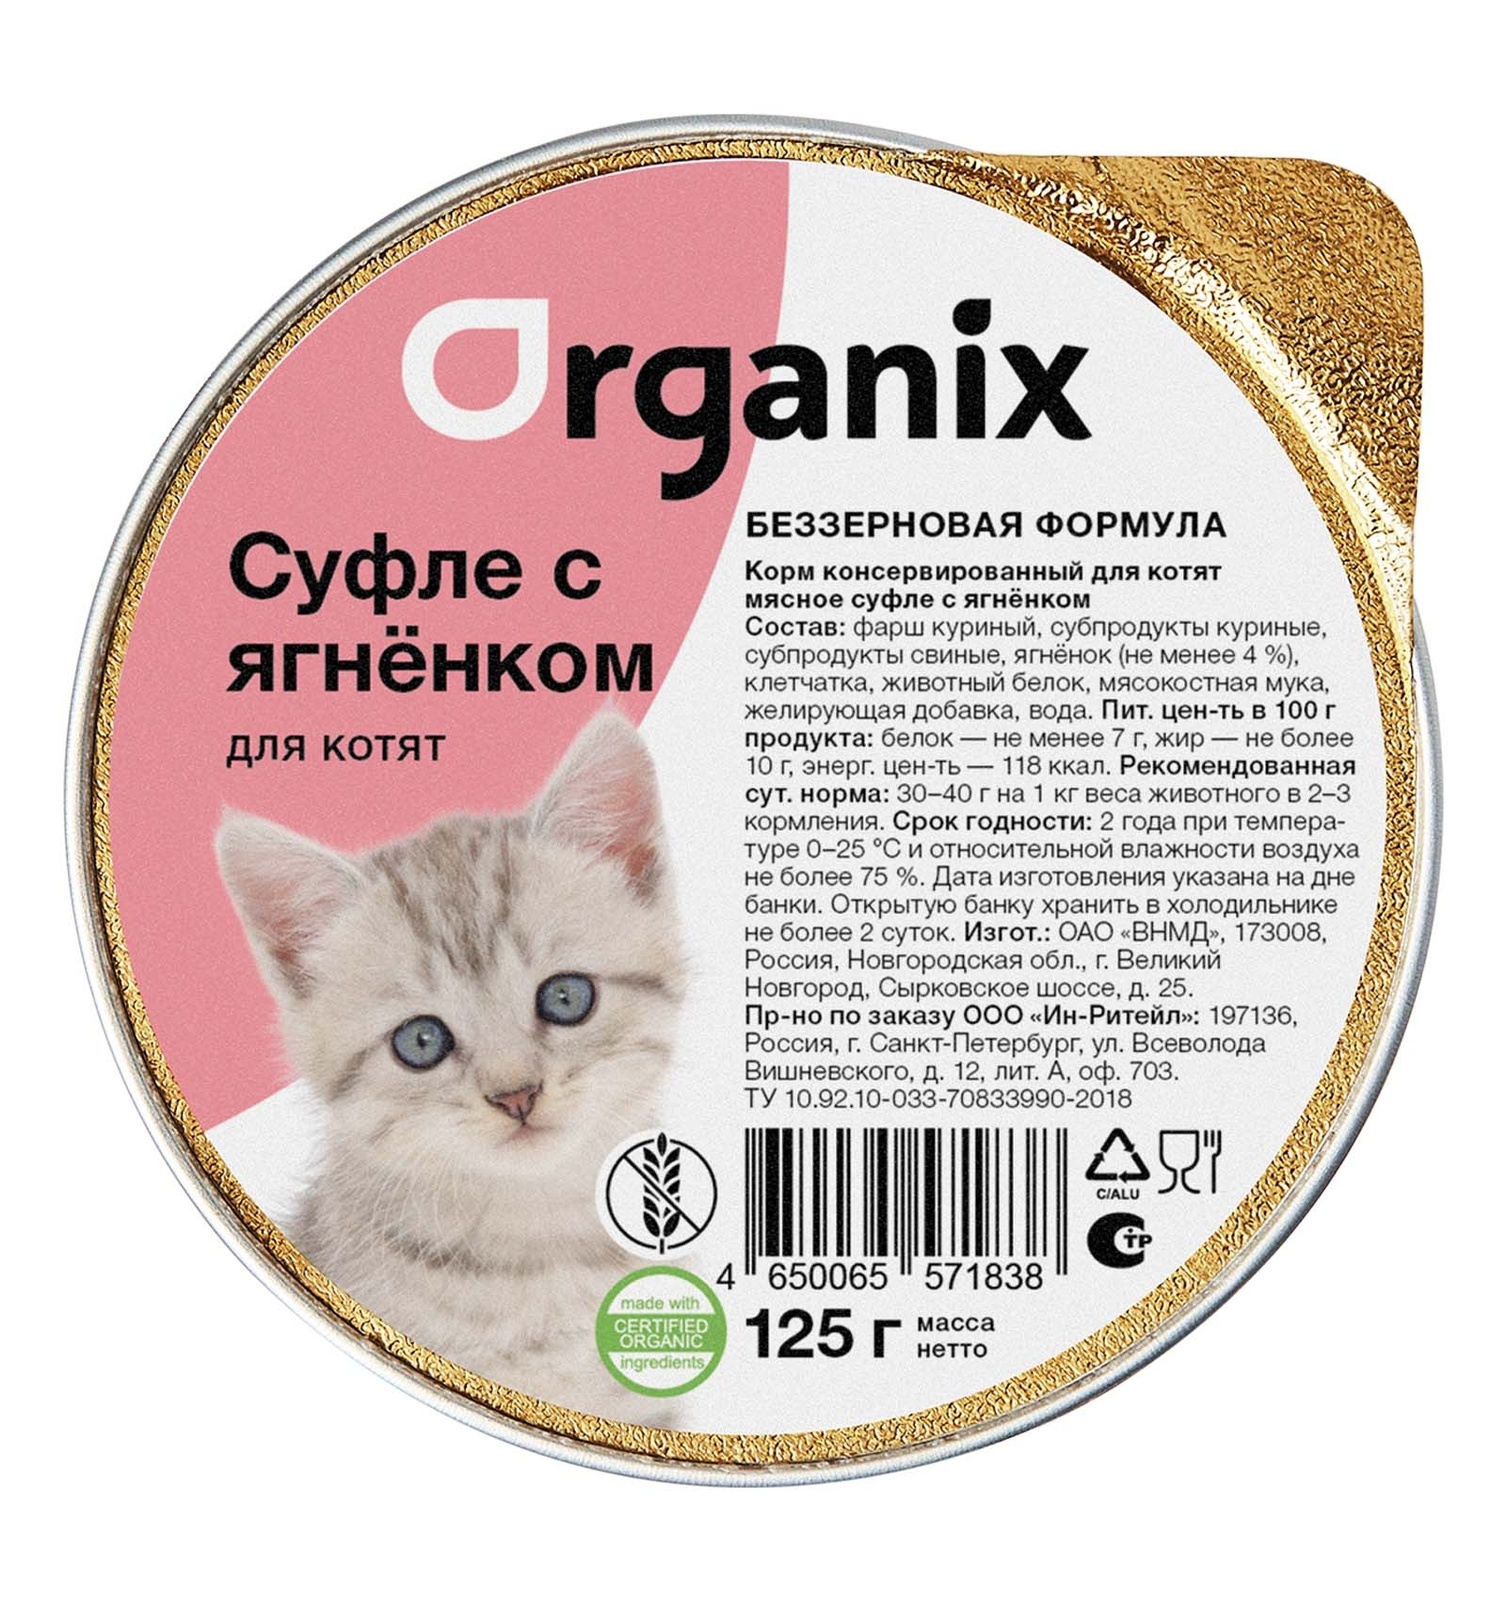 Organix мясное суфле с ягнёнком для котят (125 г)